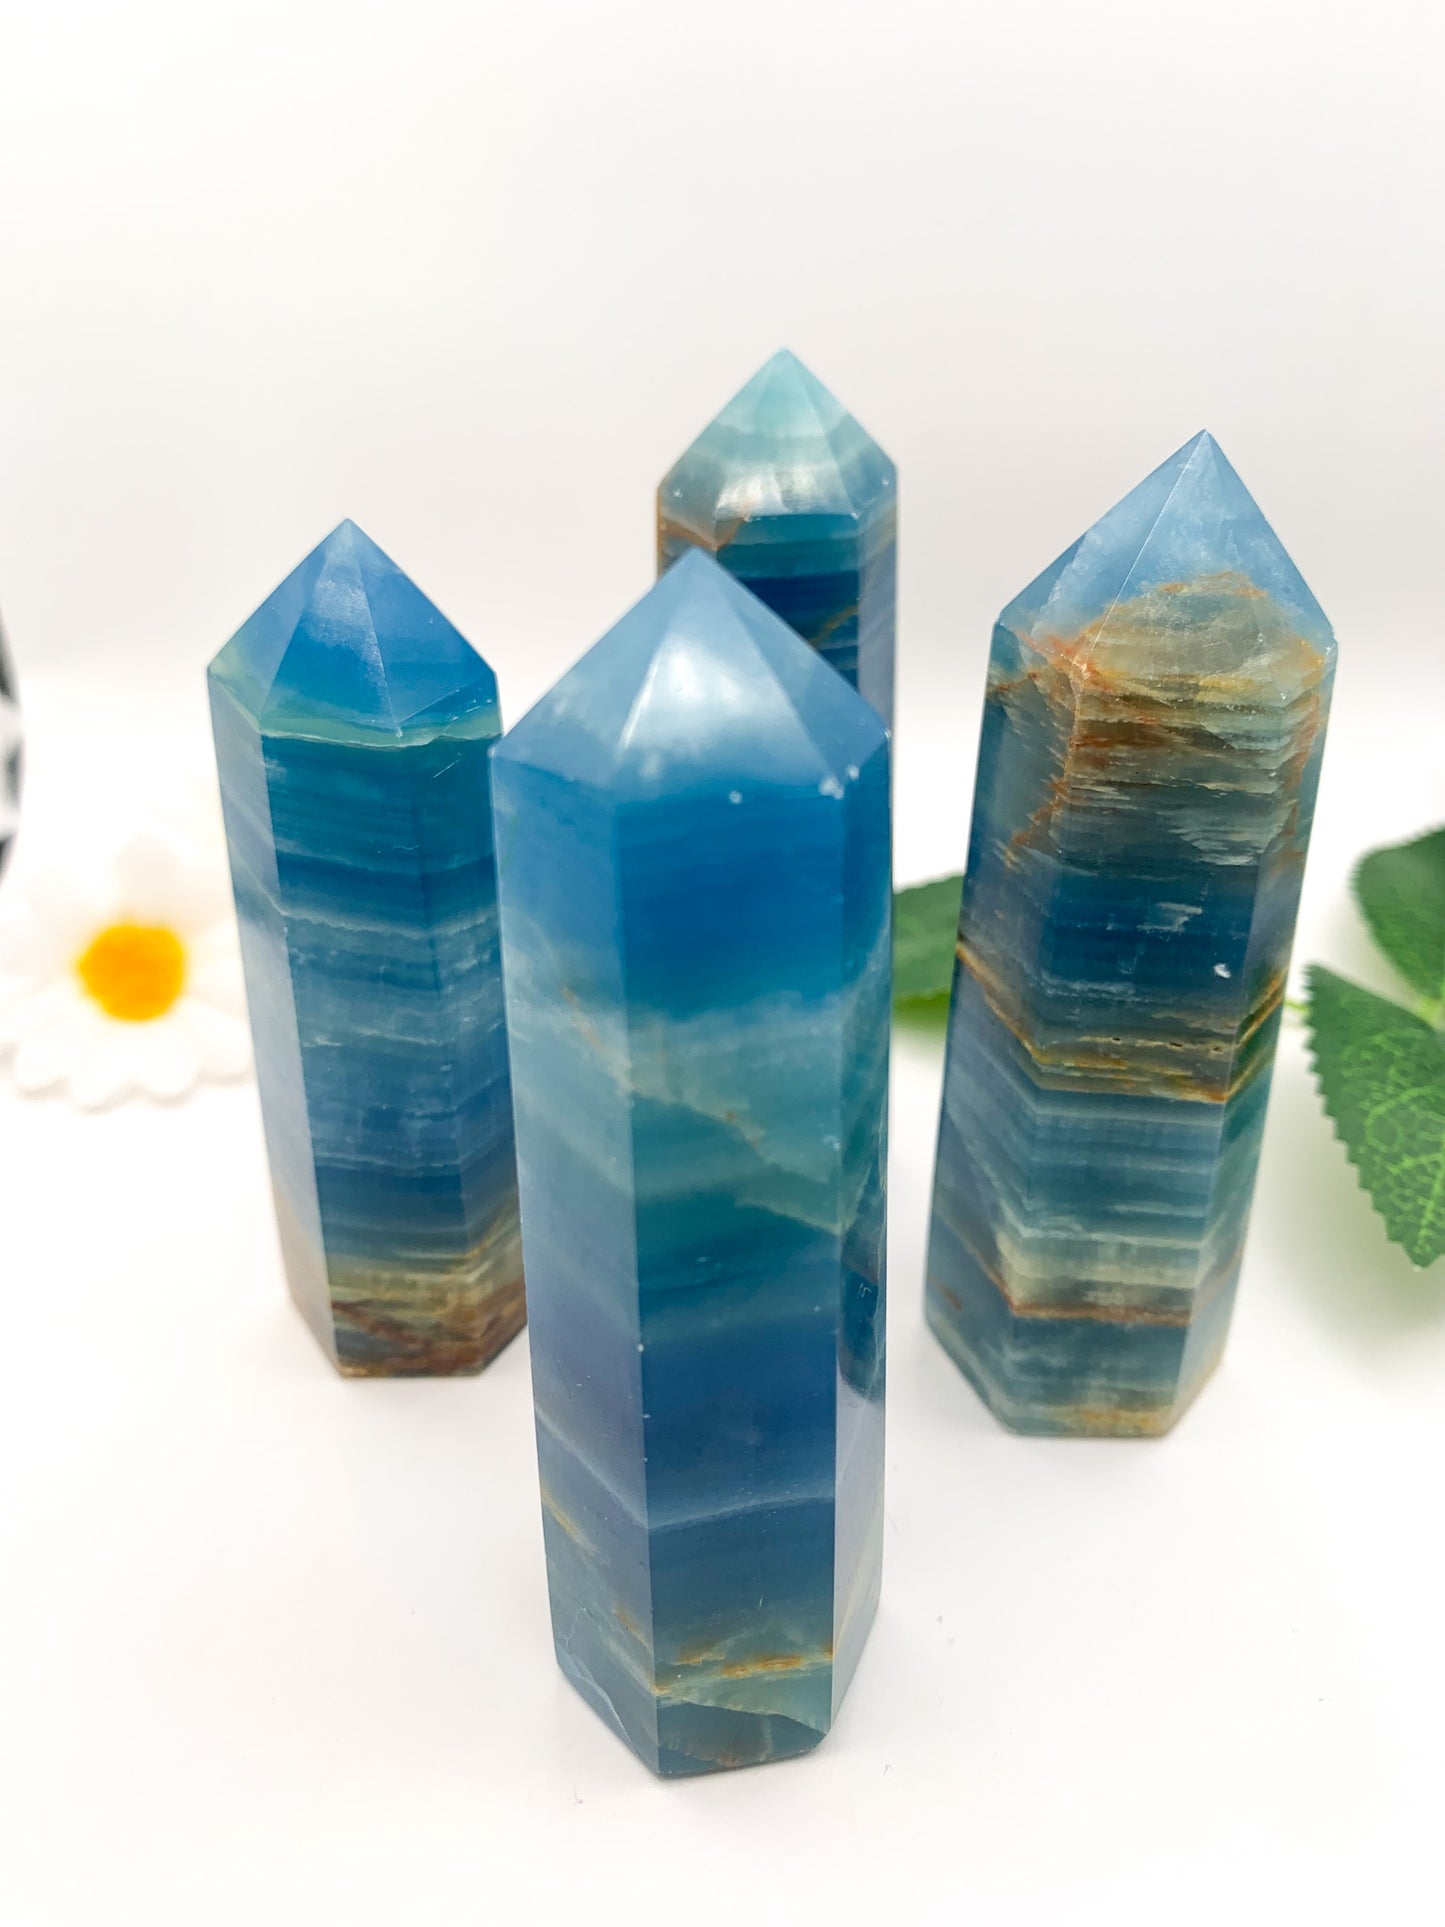 Lemurian Aquatine Calcite Tower/ Argentinian Blue Onyx (Rare) - Crystal Love Treasures